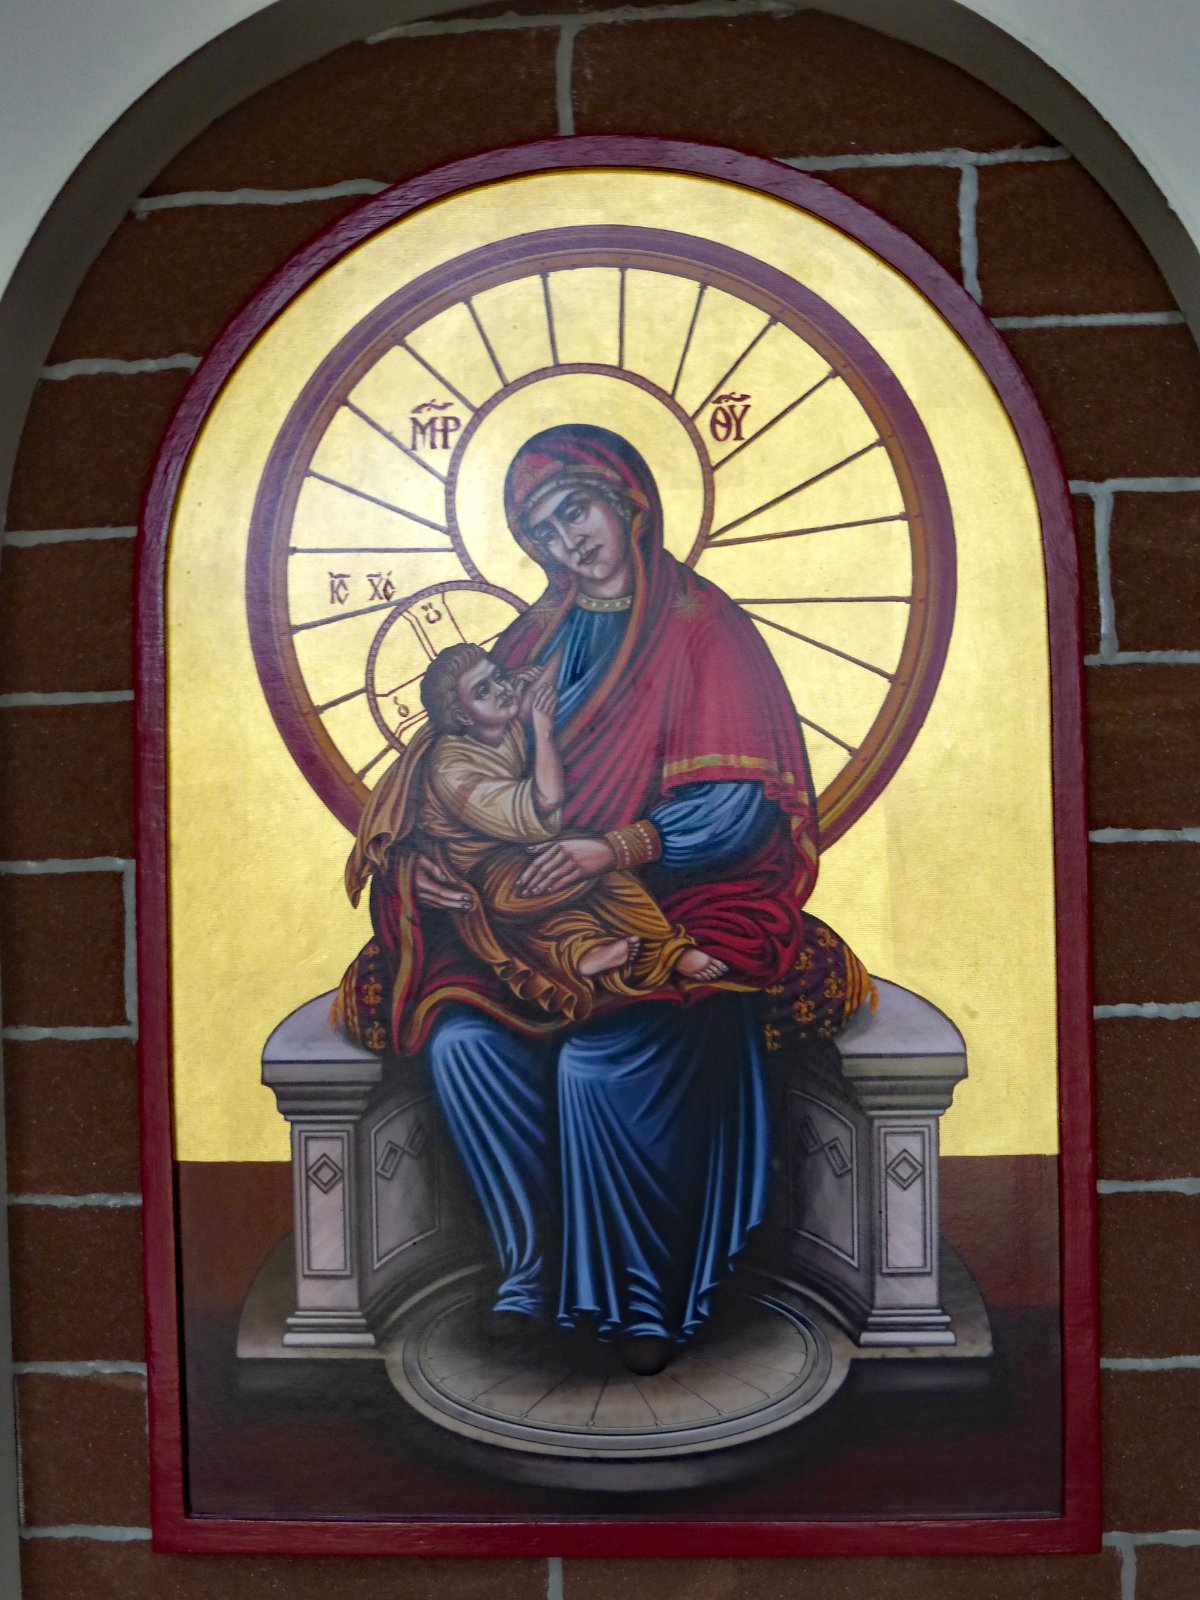 Ikone der Madonna di Ghisallo (c) M. Haschke